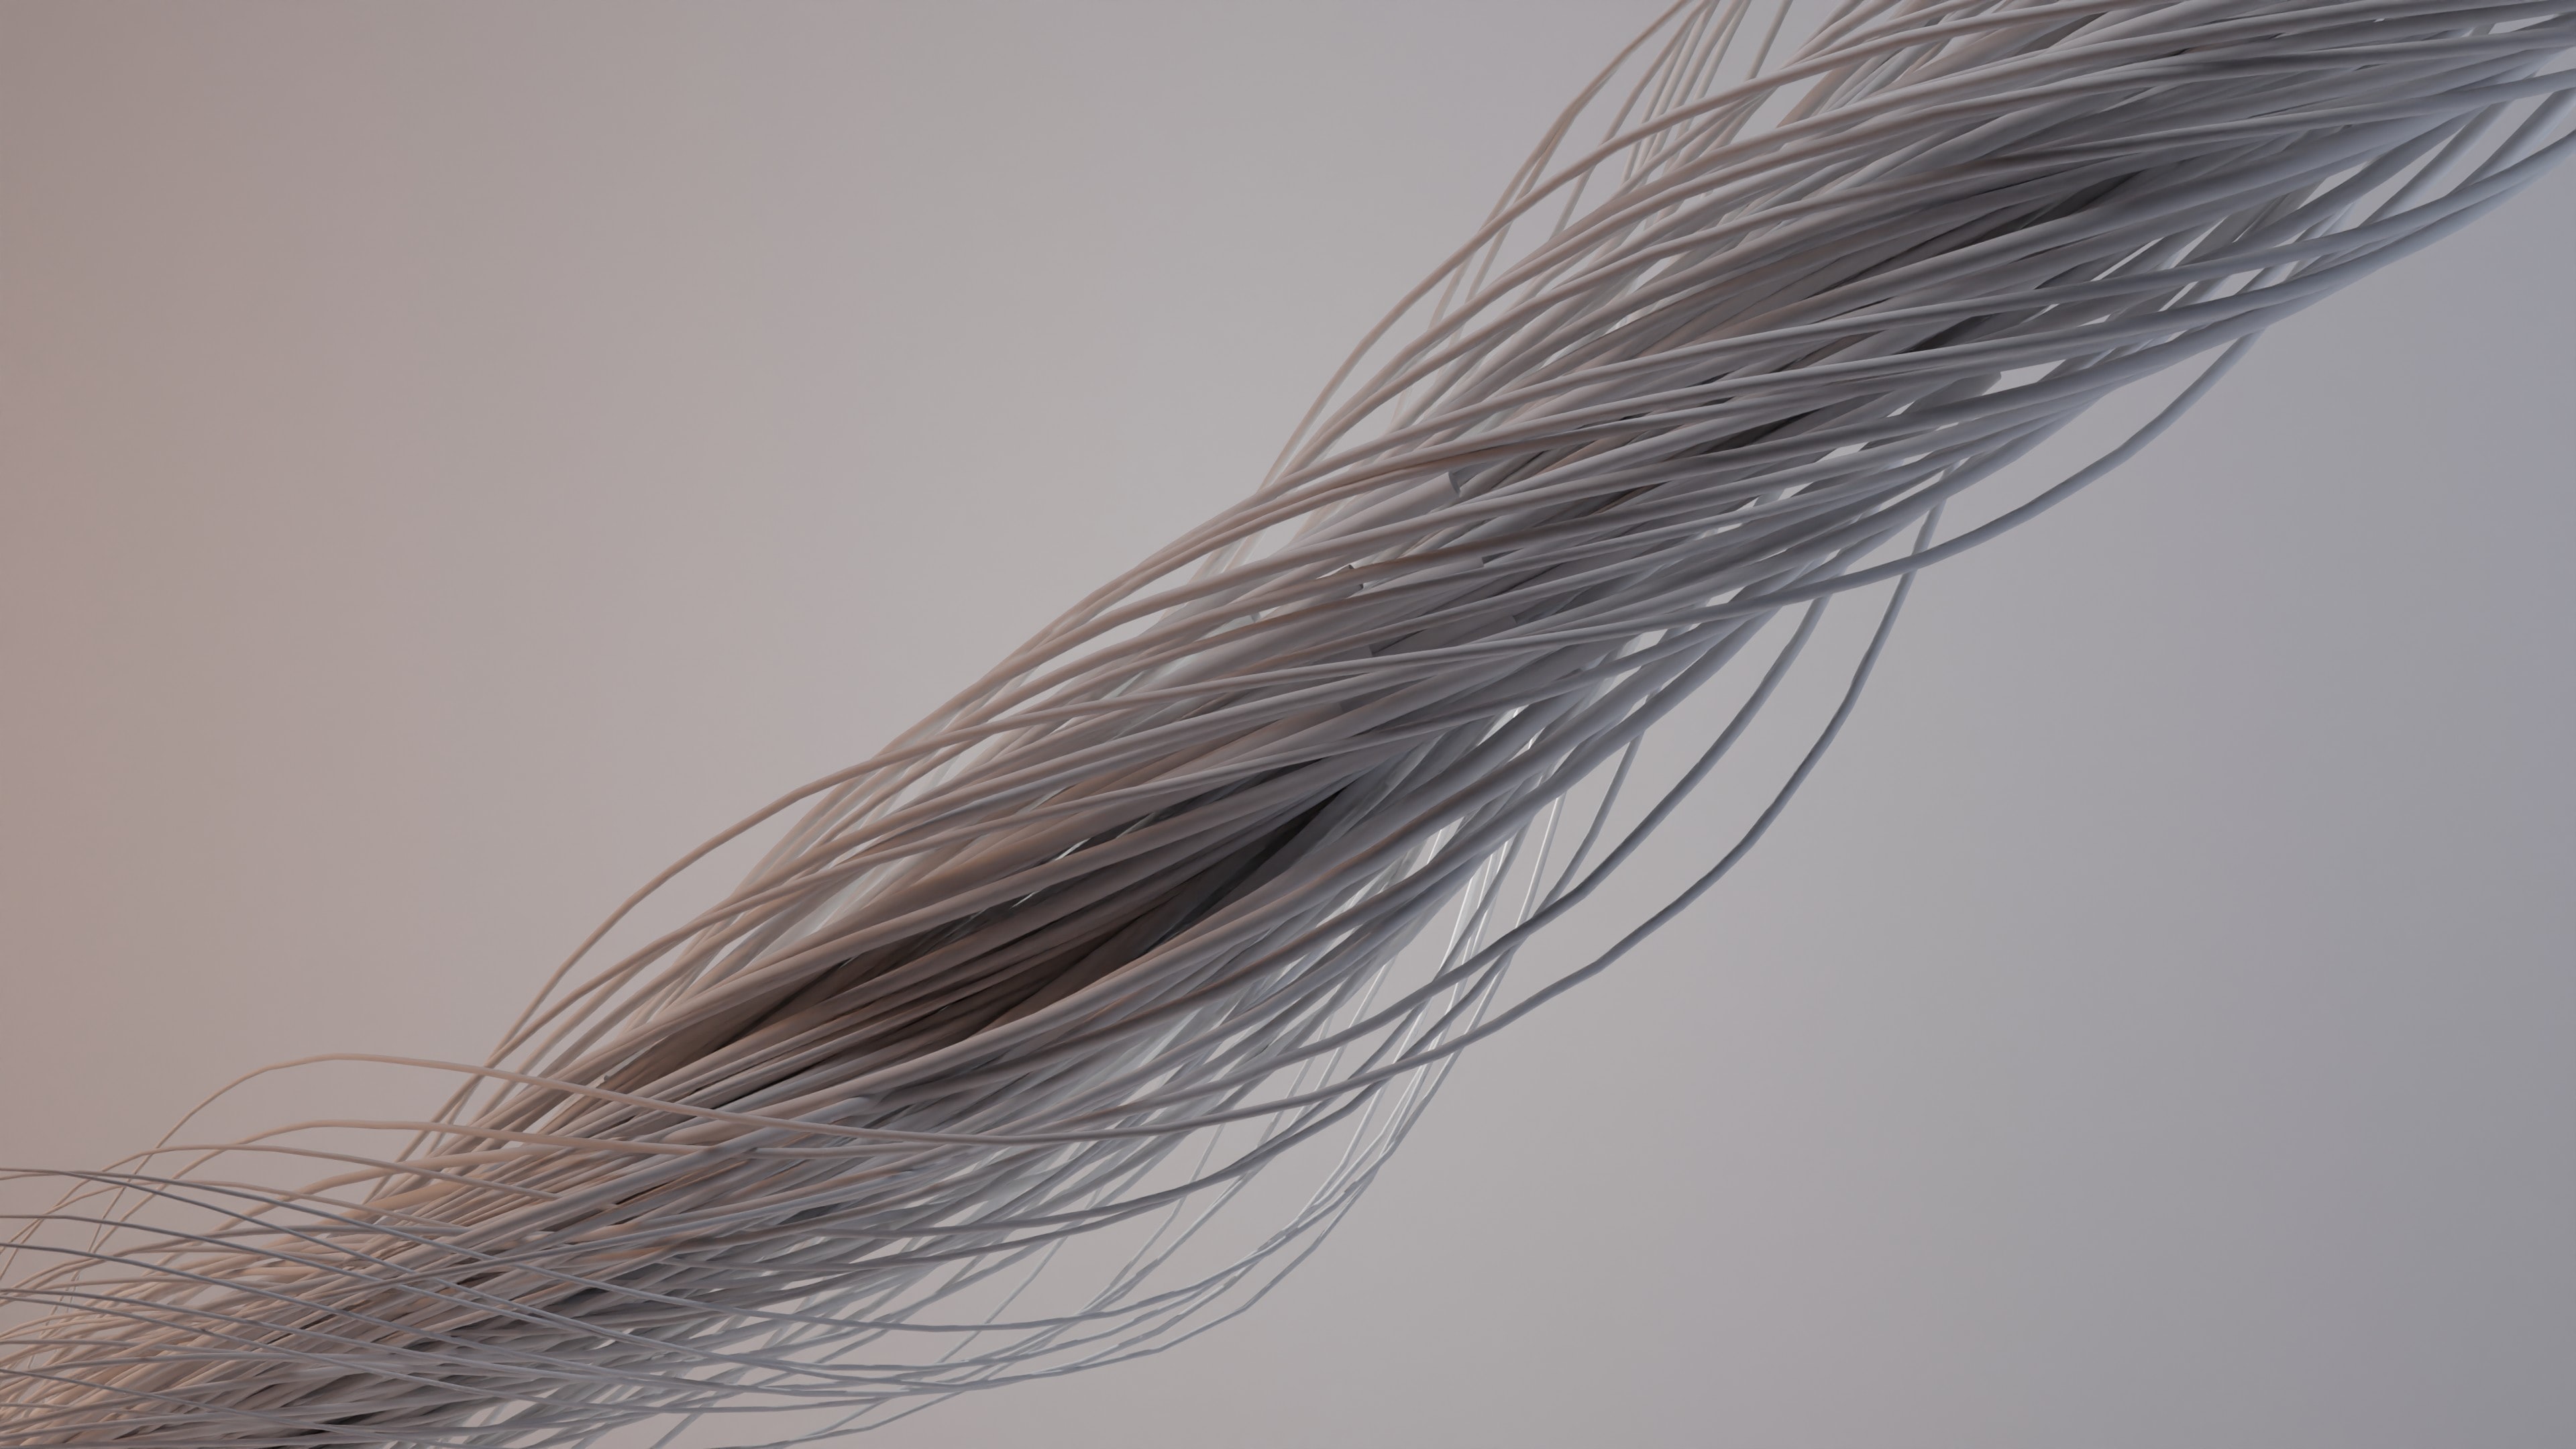 rendering of intertwined fibers